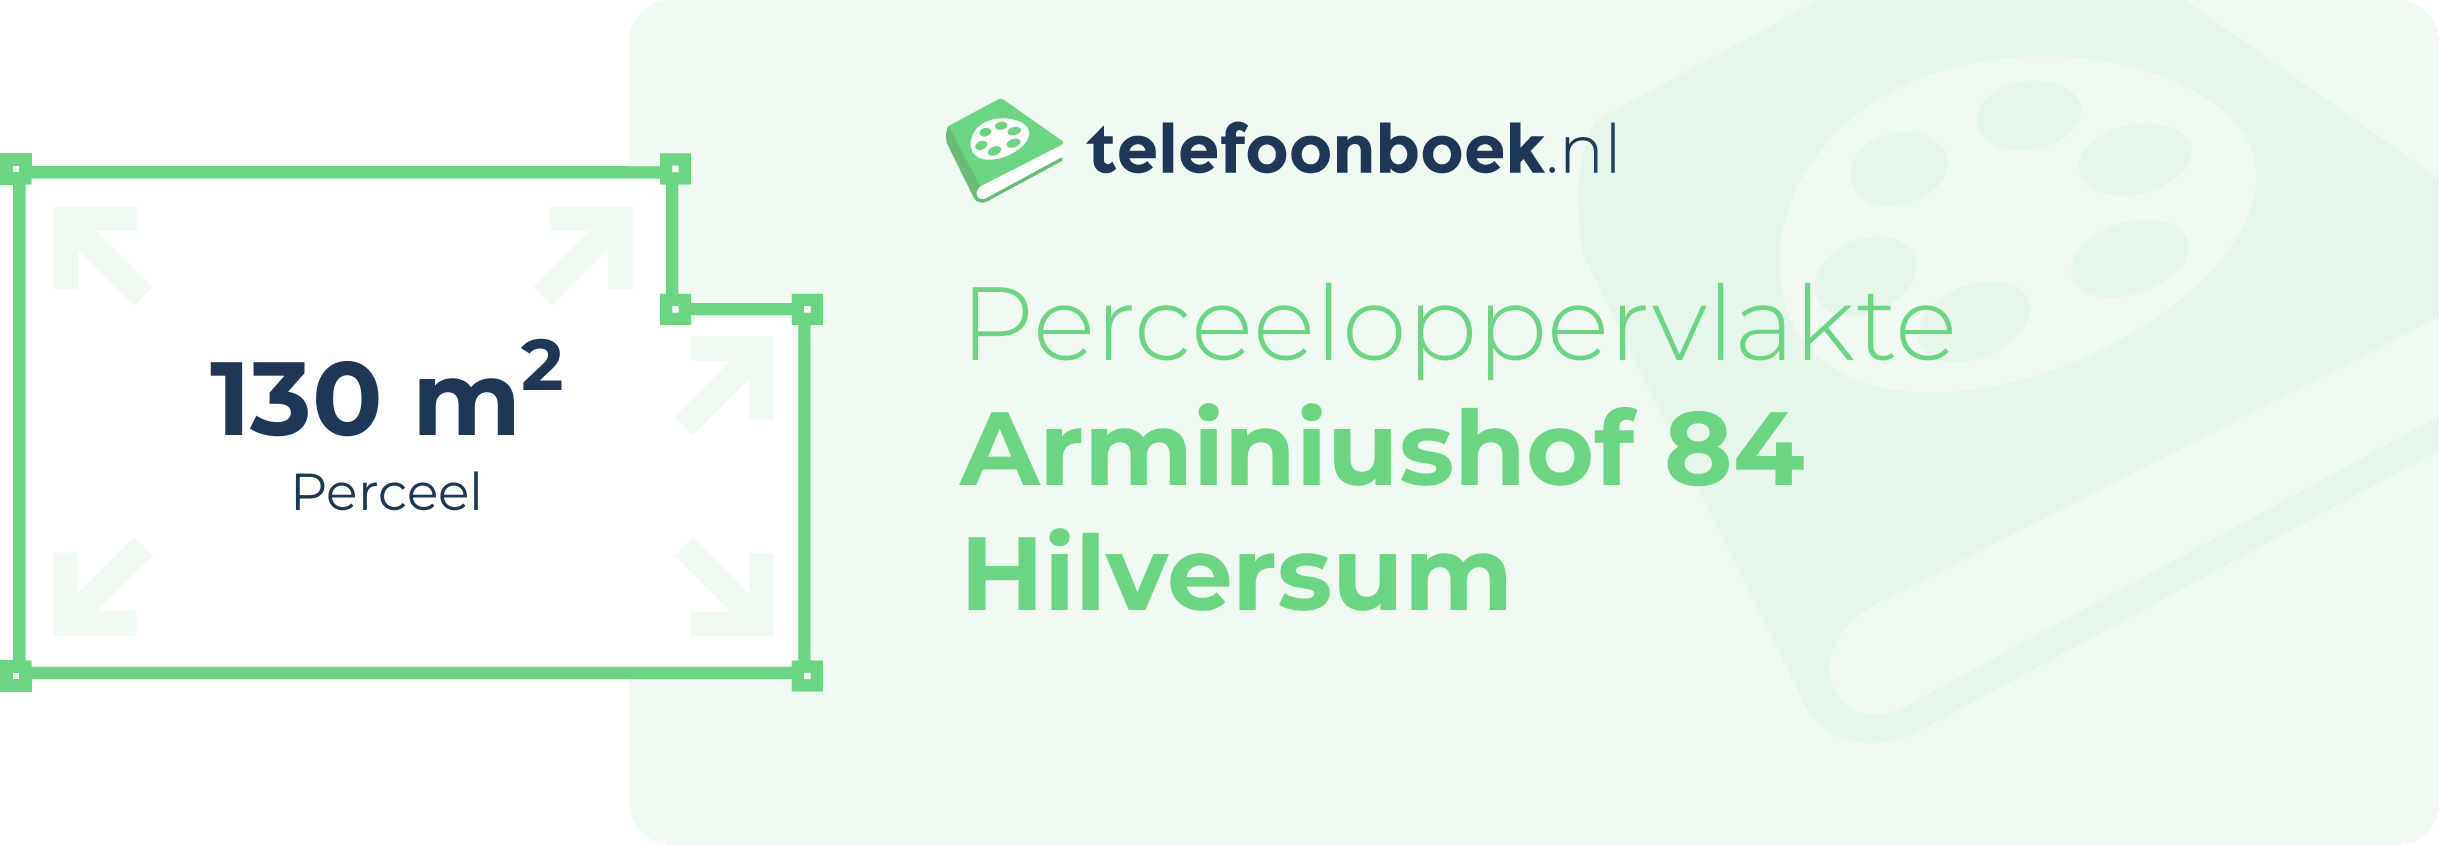 Perceeloppervlakte Arminiushof 84 Hilversum